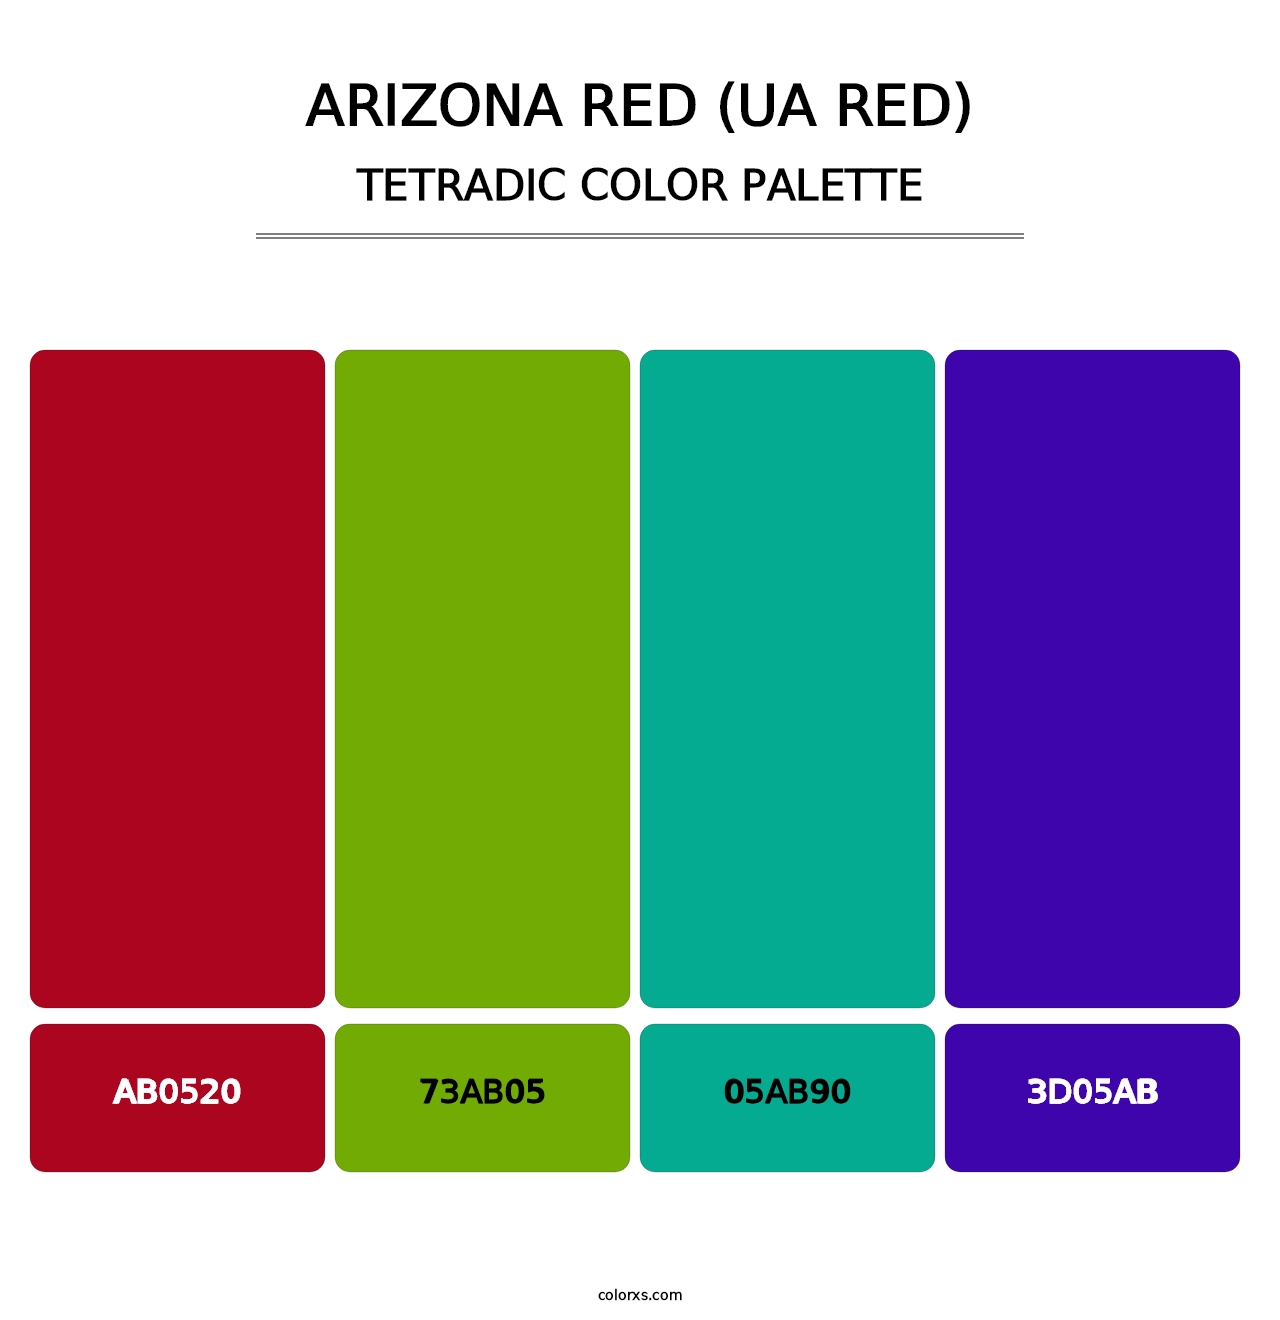 Arizona Red (UA Red) - Tetradic Color Palette